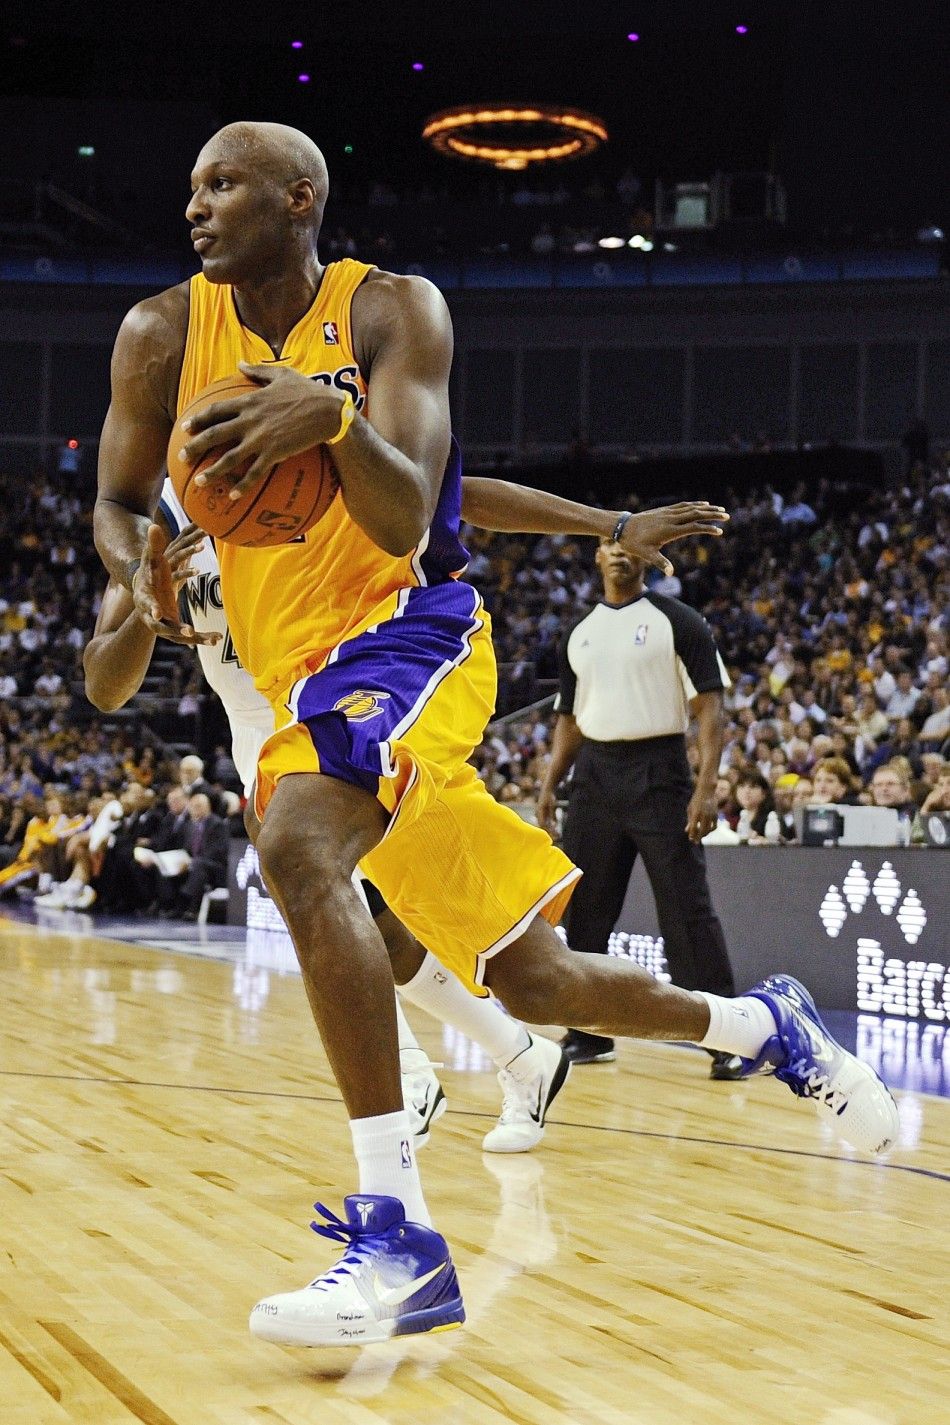 NBA player Lamar Odom